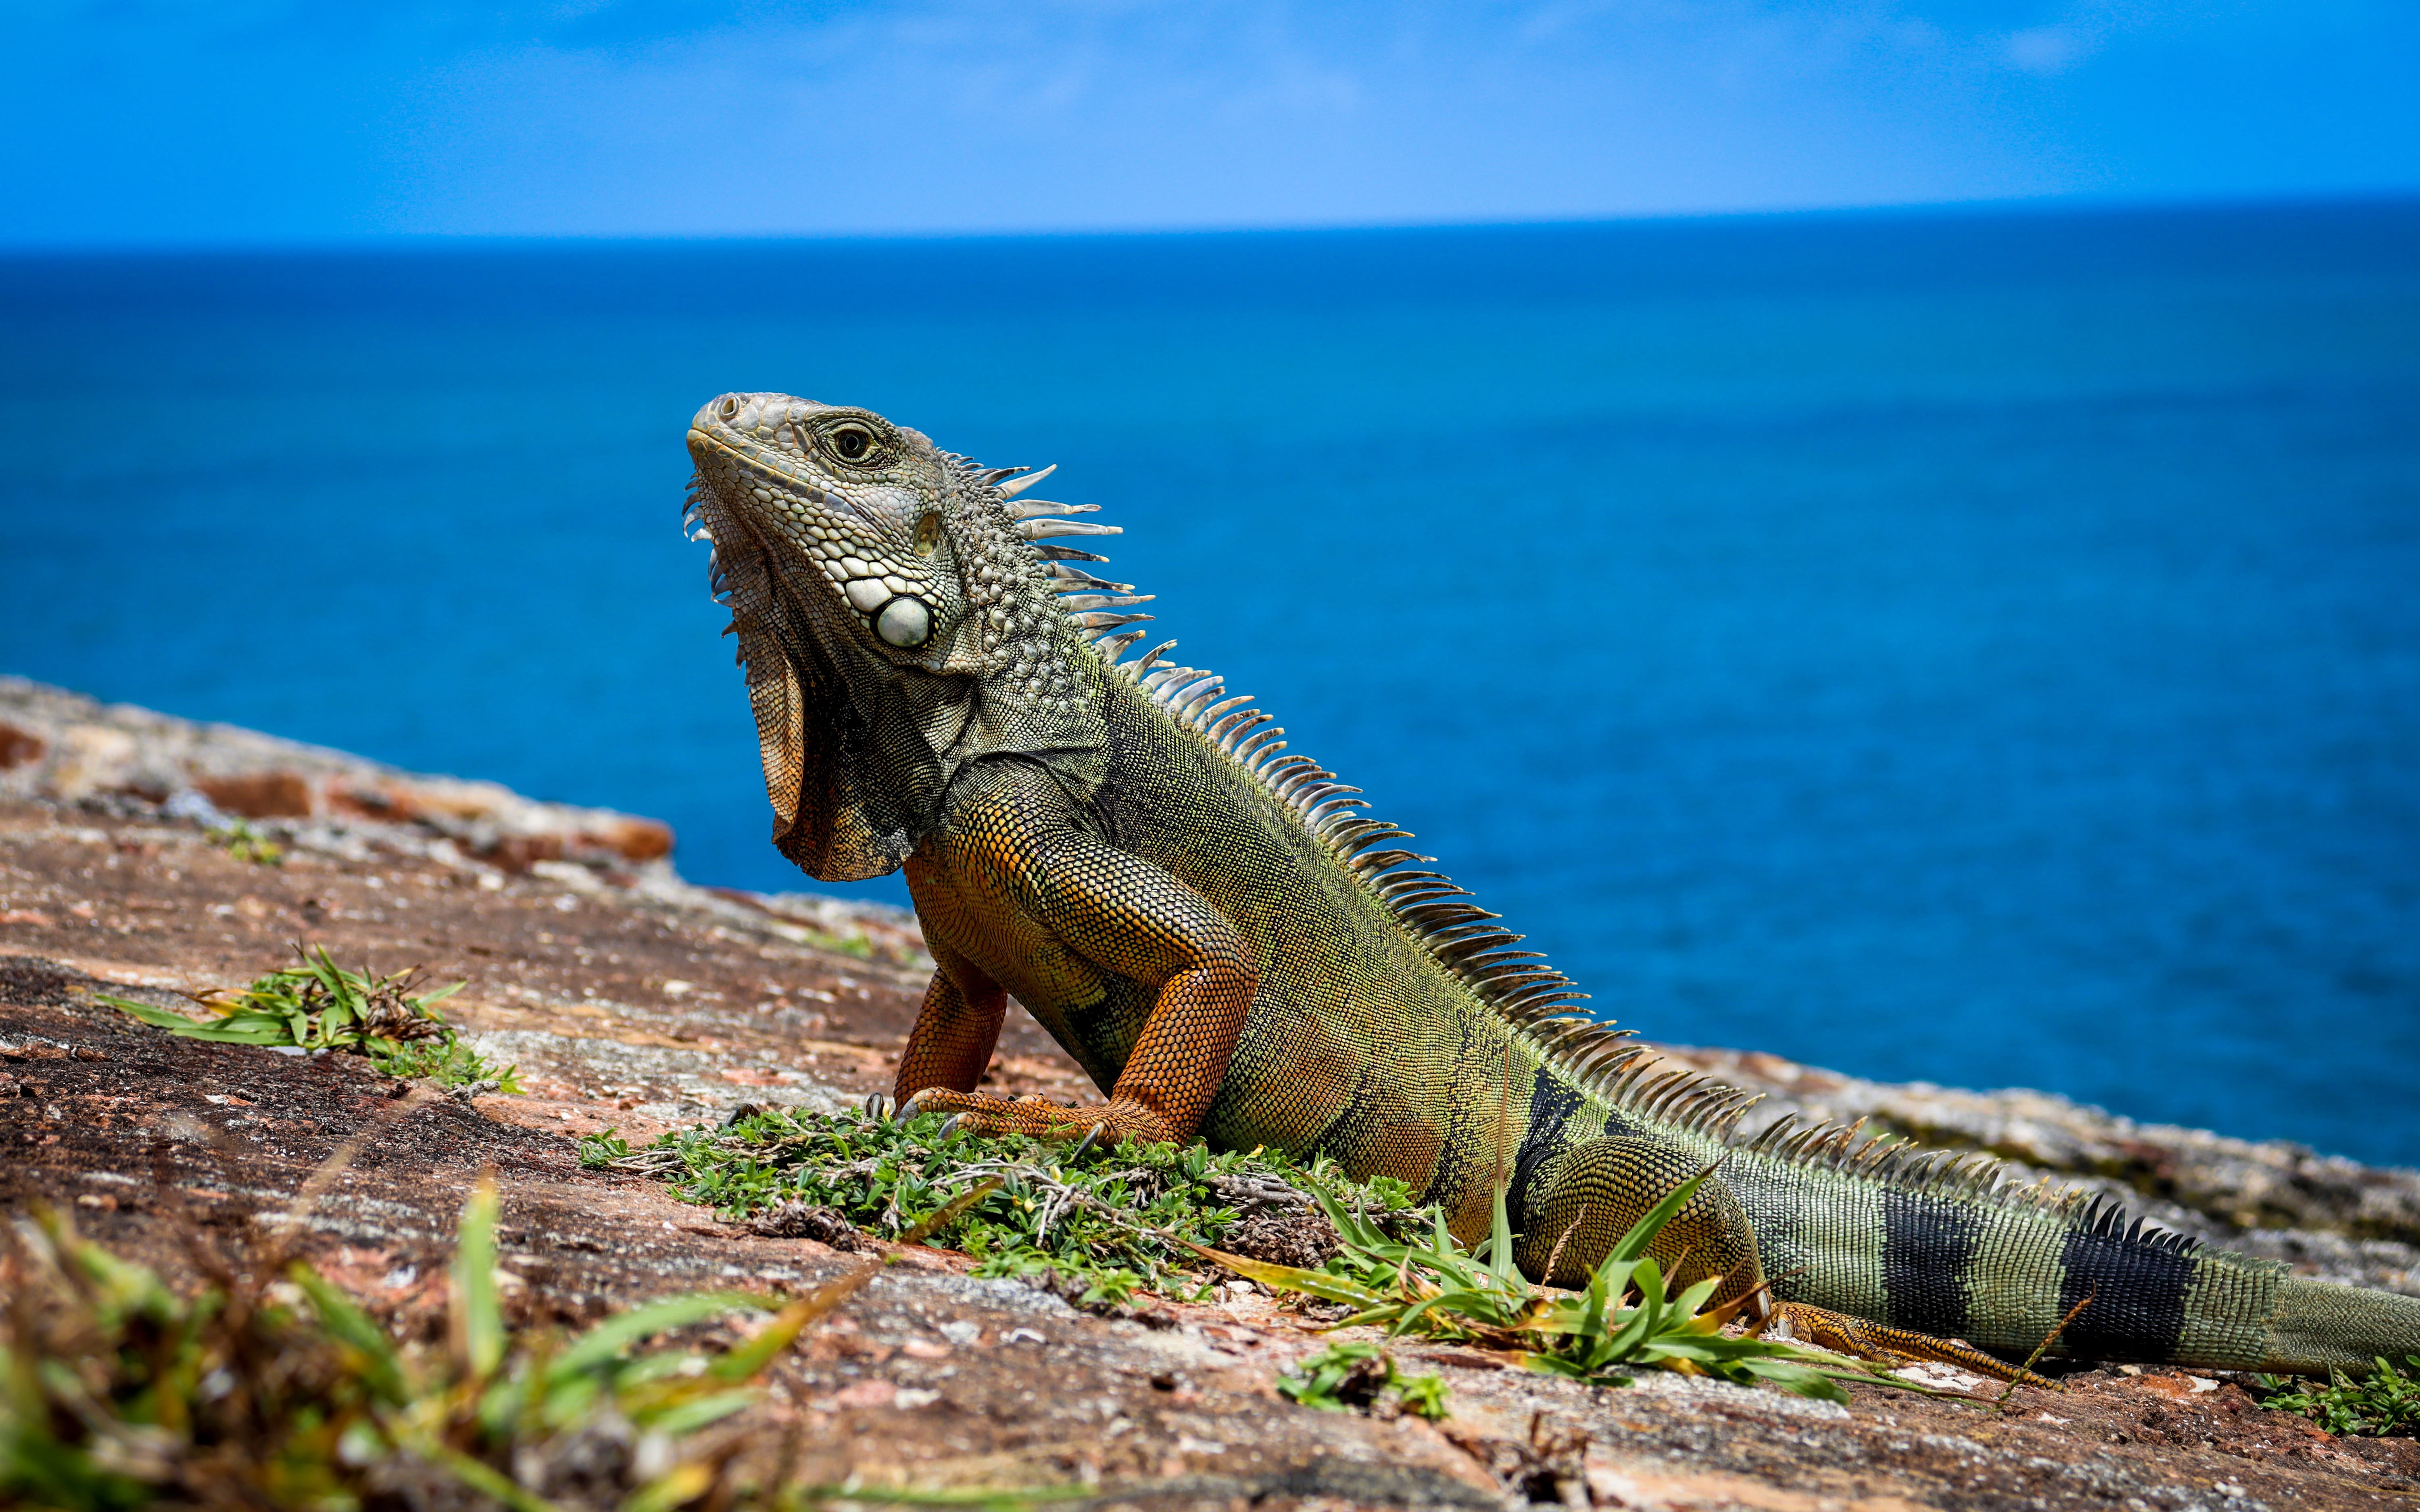 An image of an iguana on the beach.